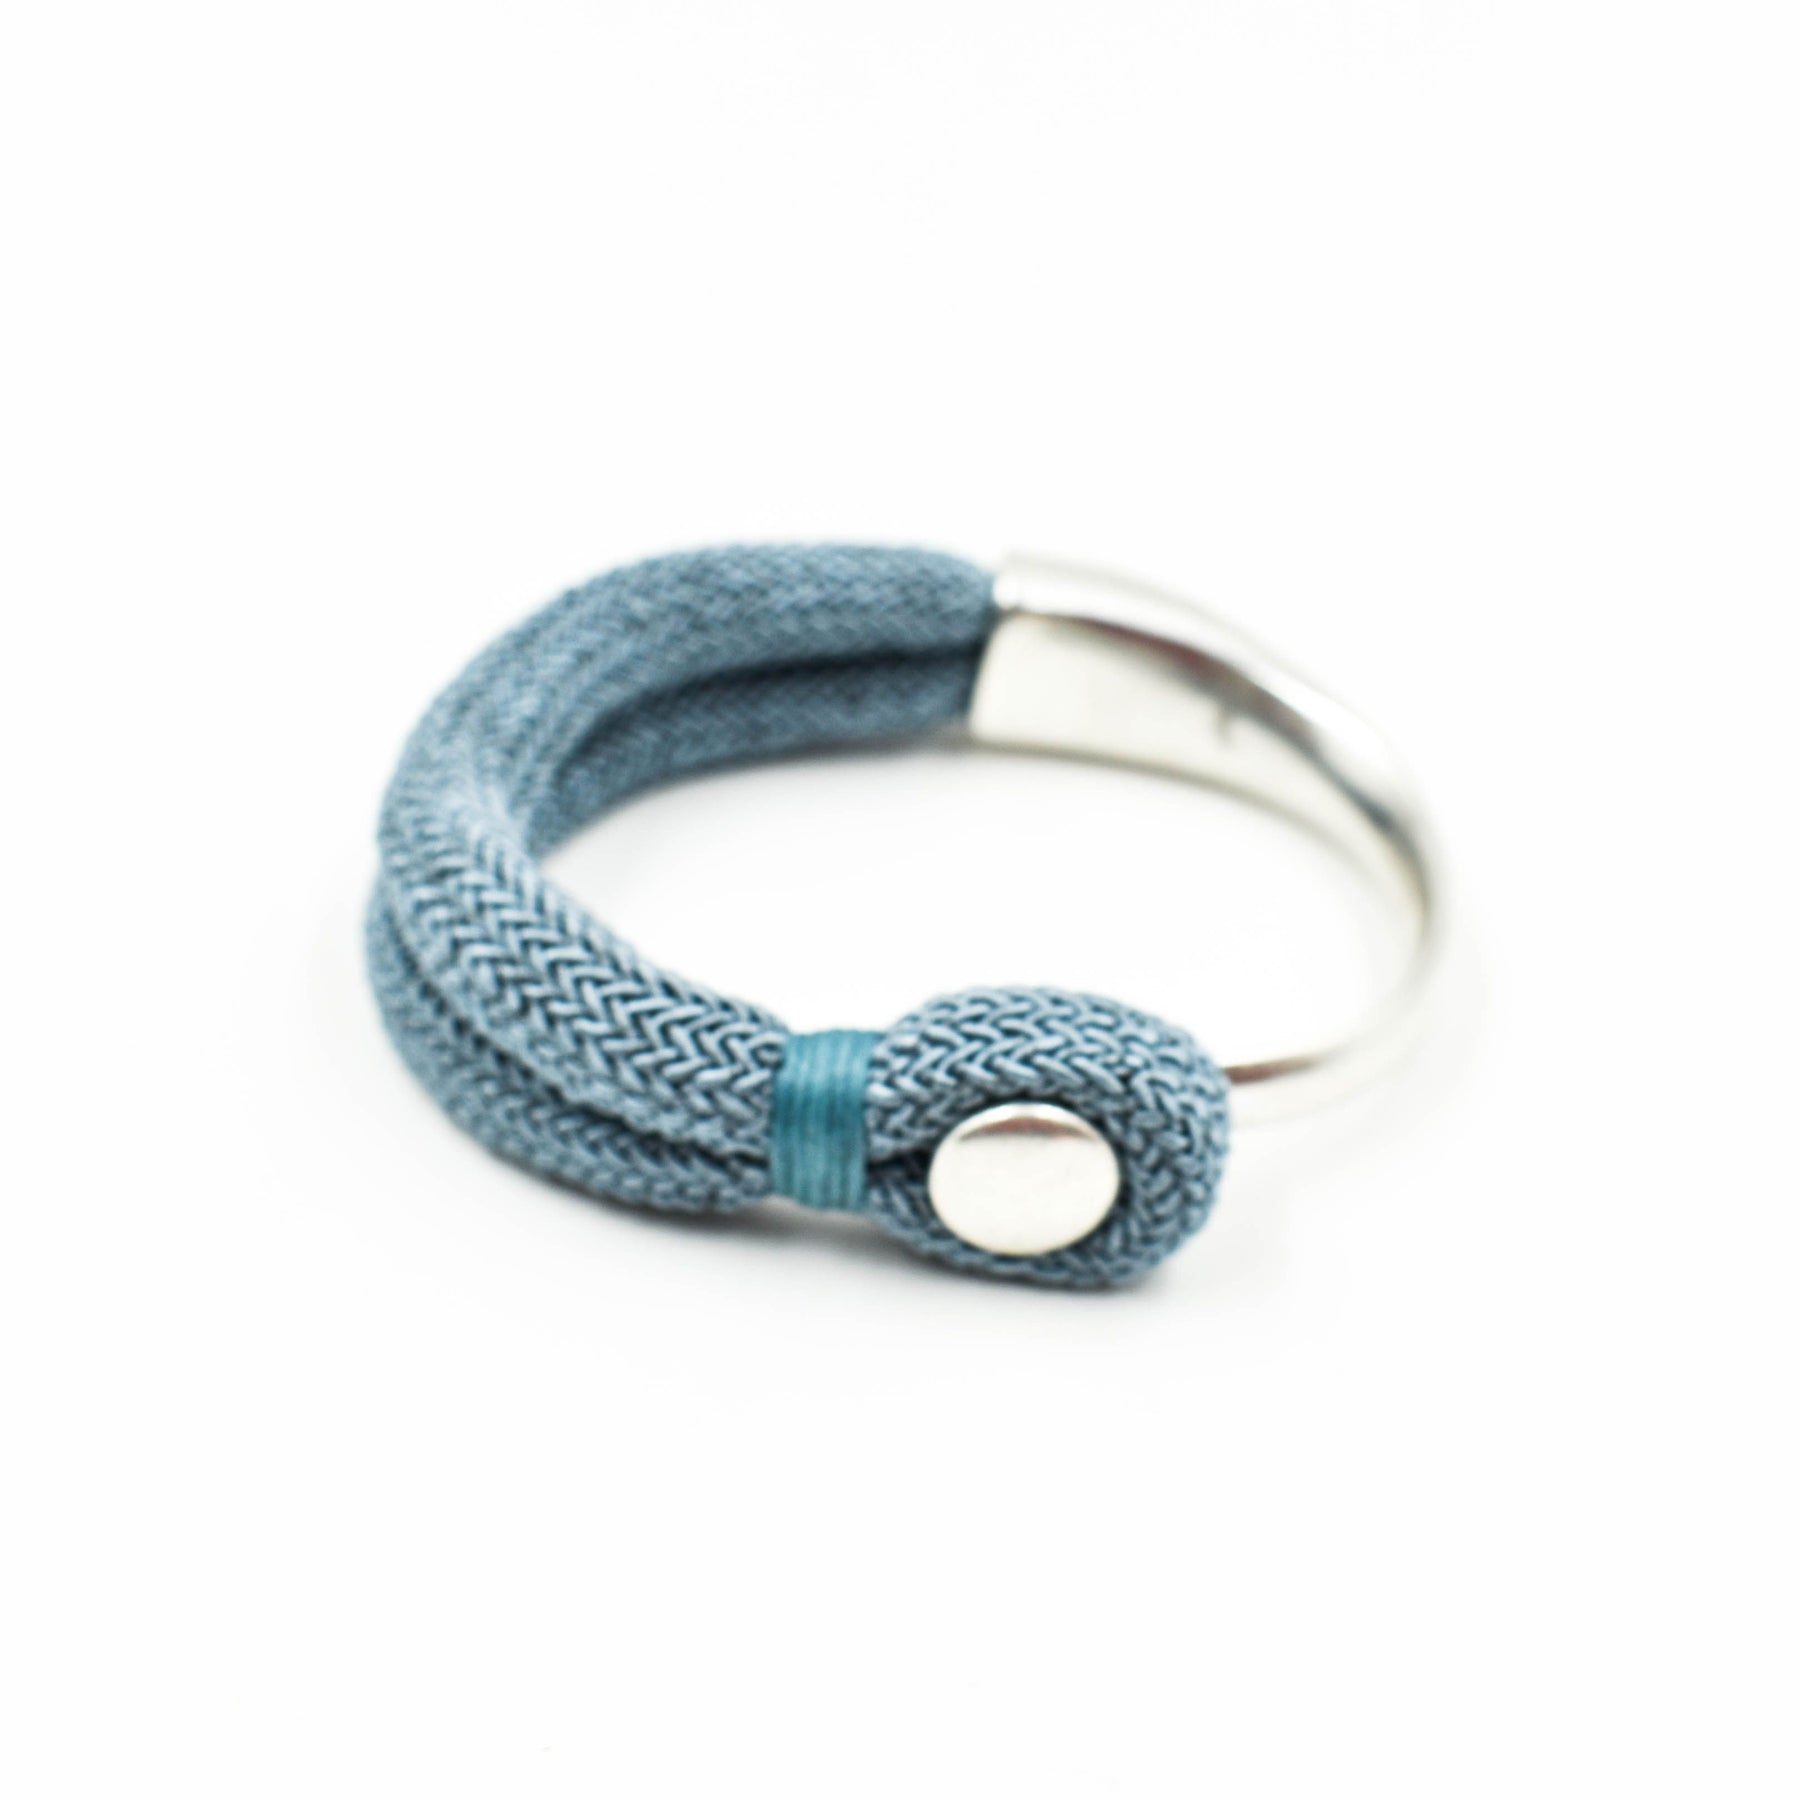 Aitne Bracelet in Indigo by Abacus Row Handmade Jewelry | Abacus Row |  Handmade Jewelry